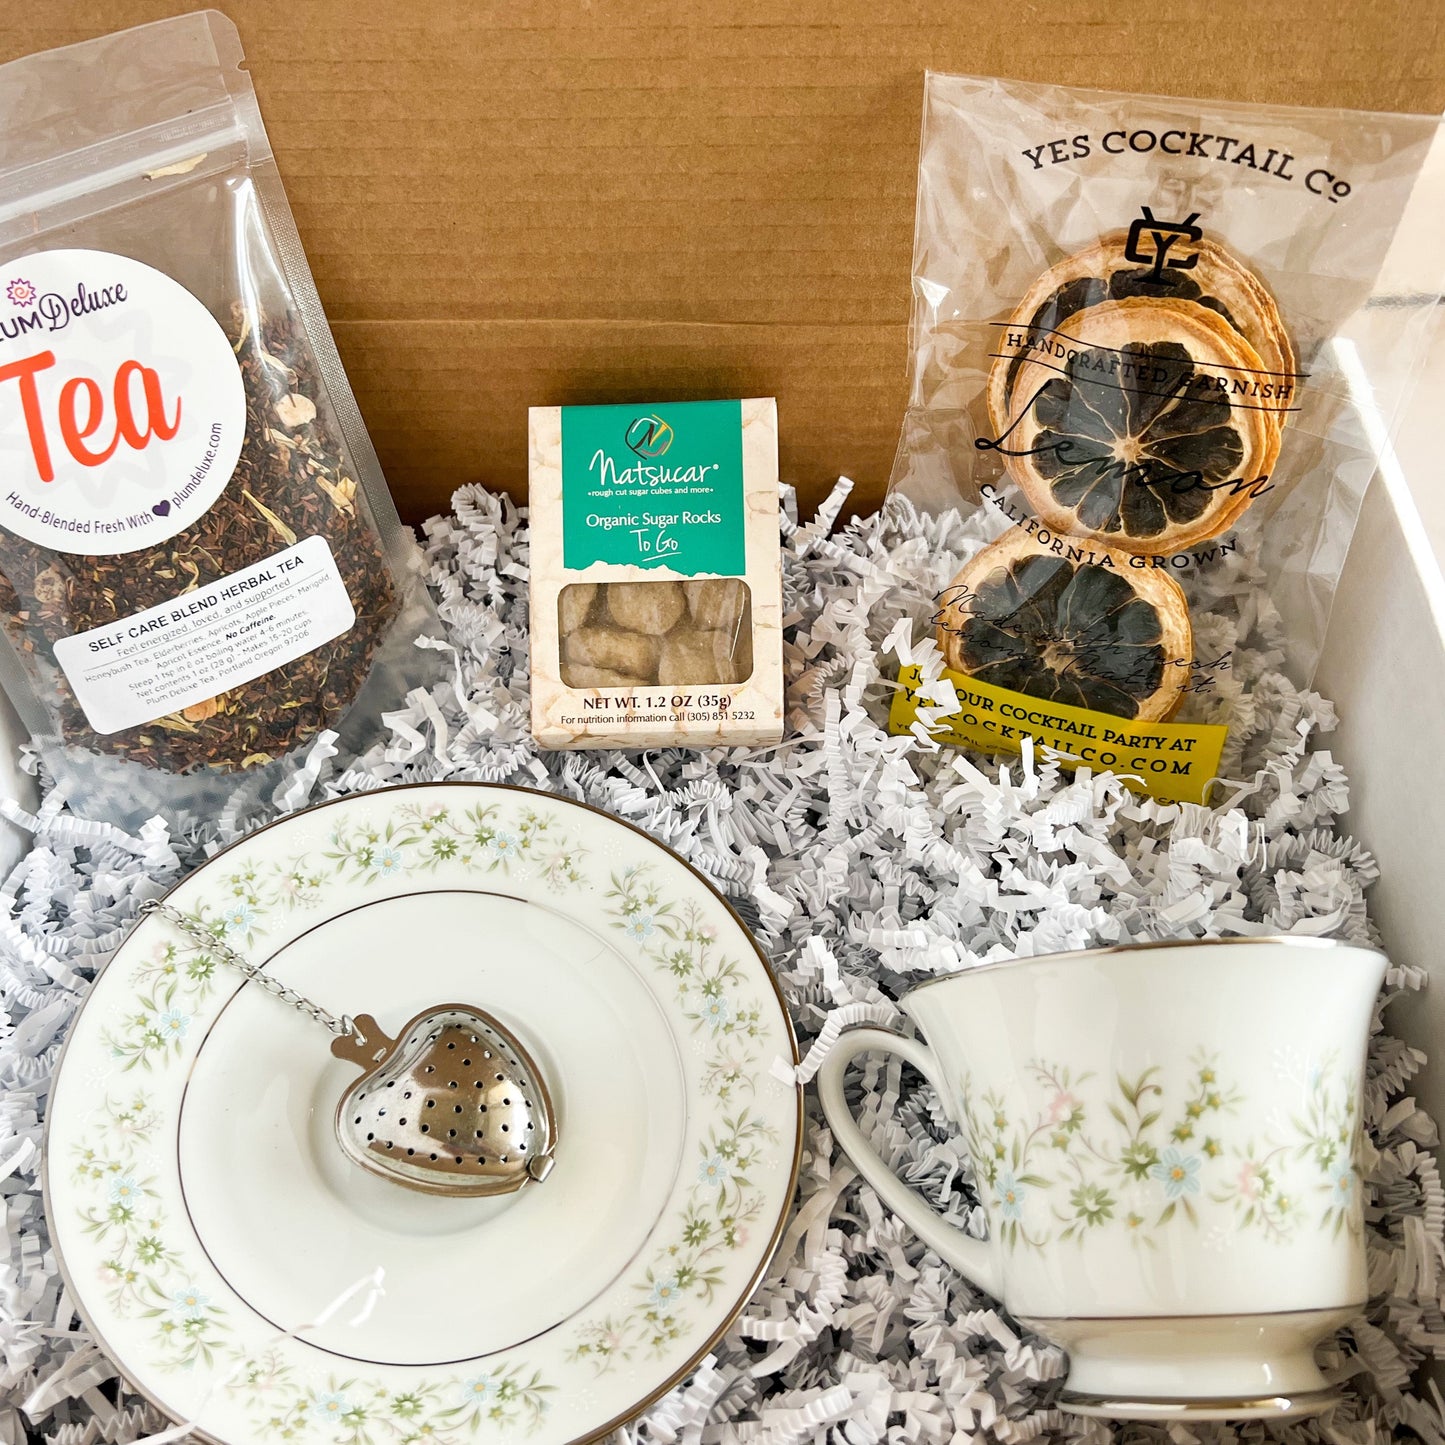 vintage tea cup kit with tea - vintage tea cup - 1 oz specialty blend tea - dried lemon garnish - organic sugar cubes